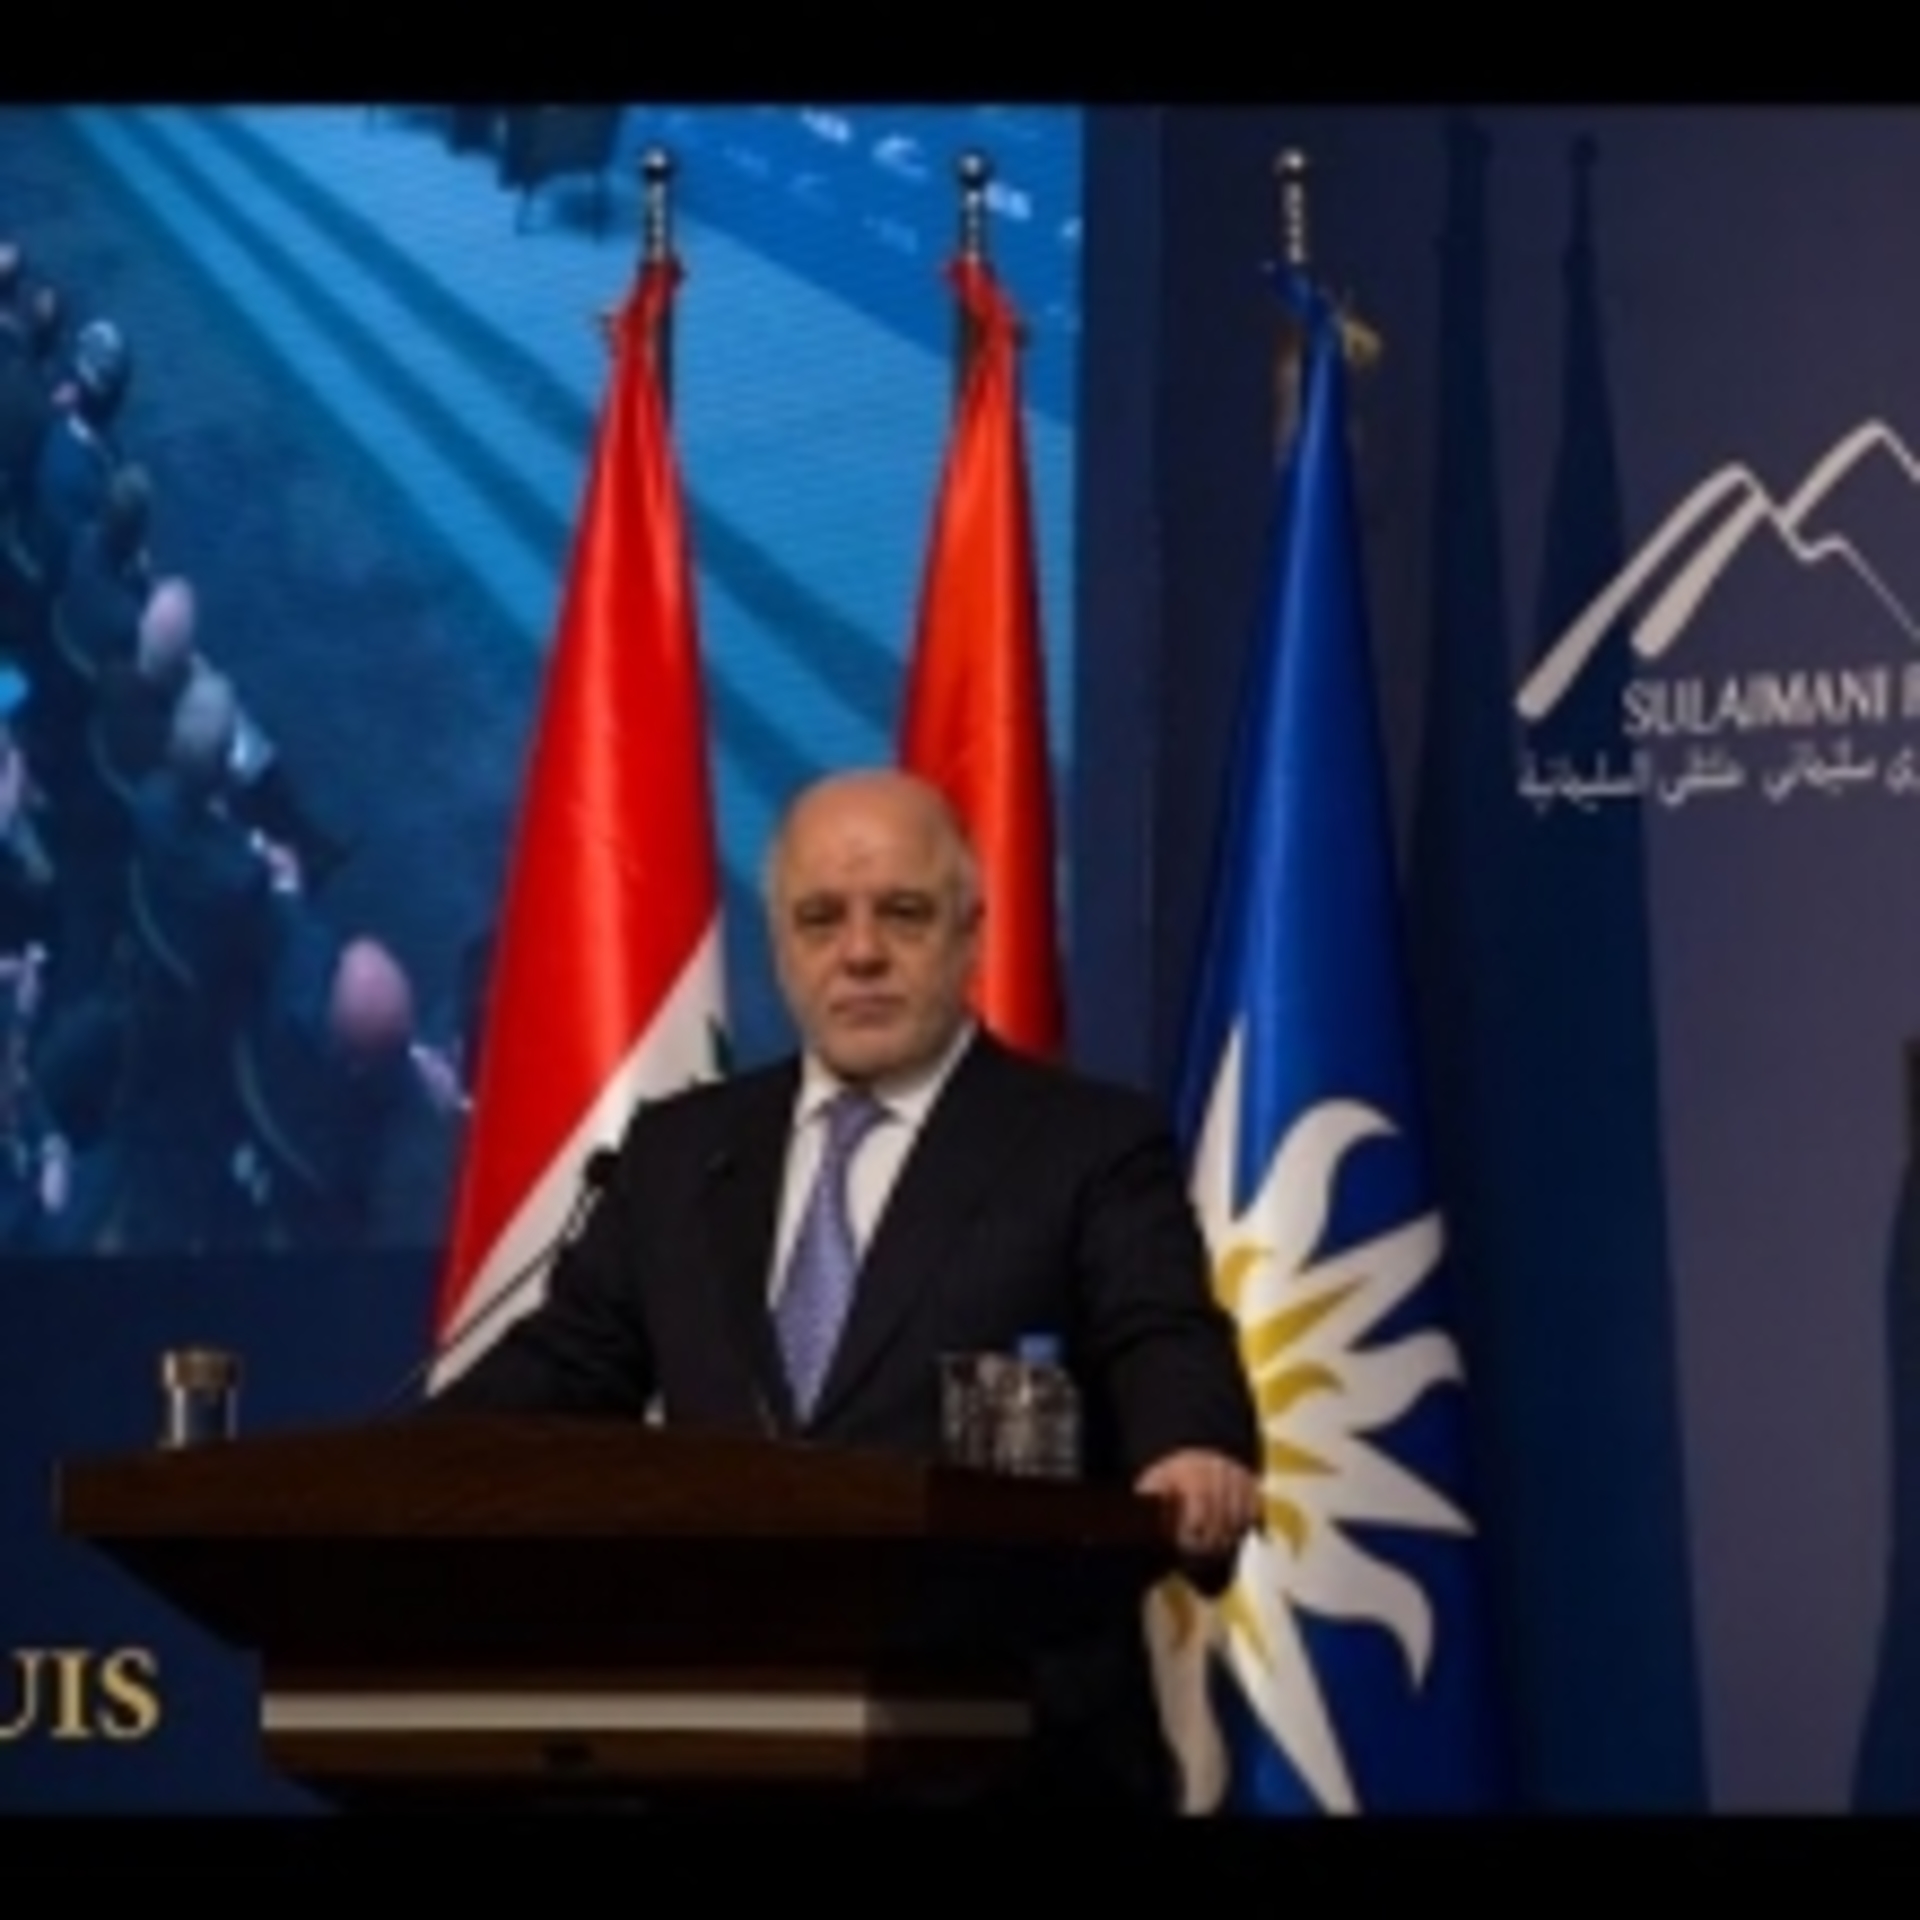 Sulaimani Forum: Inaugural Address by Prime Minister Haider al-Abadi